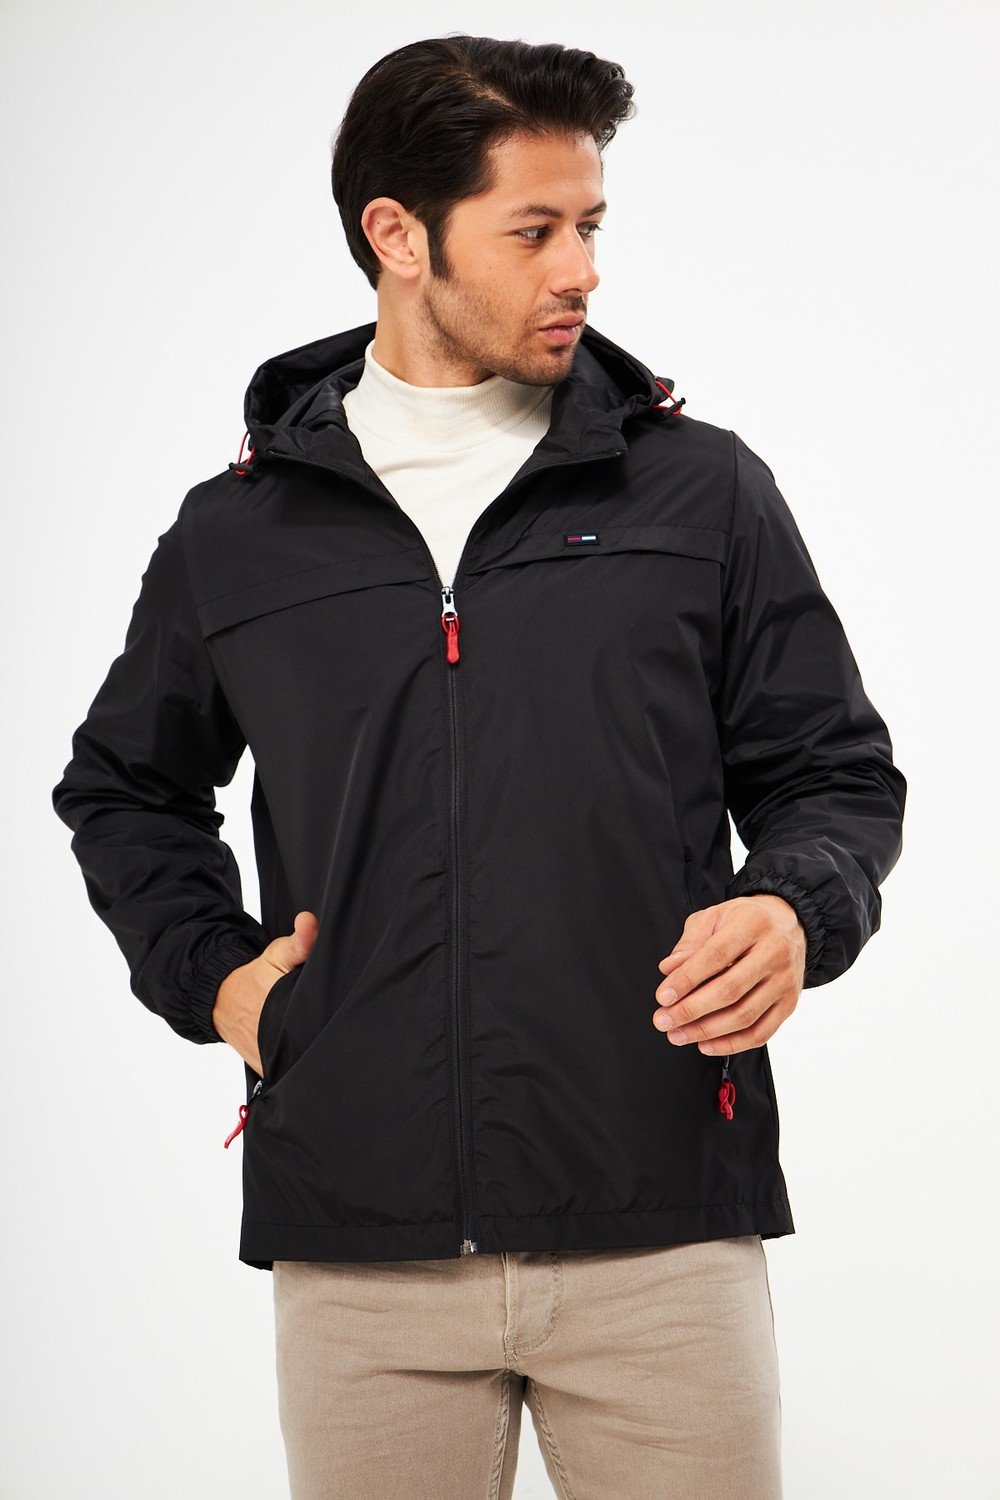 D1fference Men's Black Waterproof Hooded Raincoat with Pocket. Inner Lined.